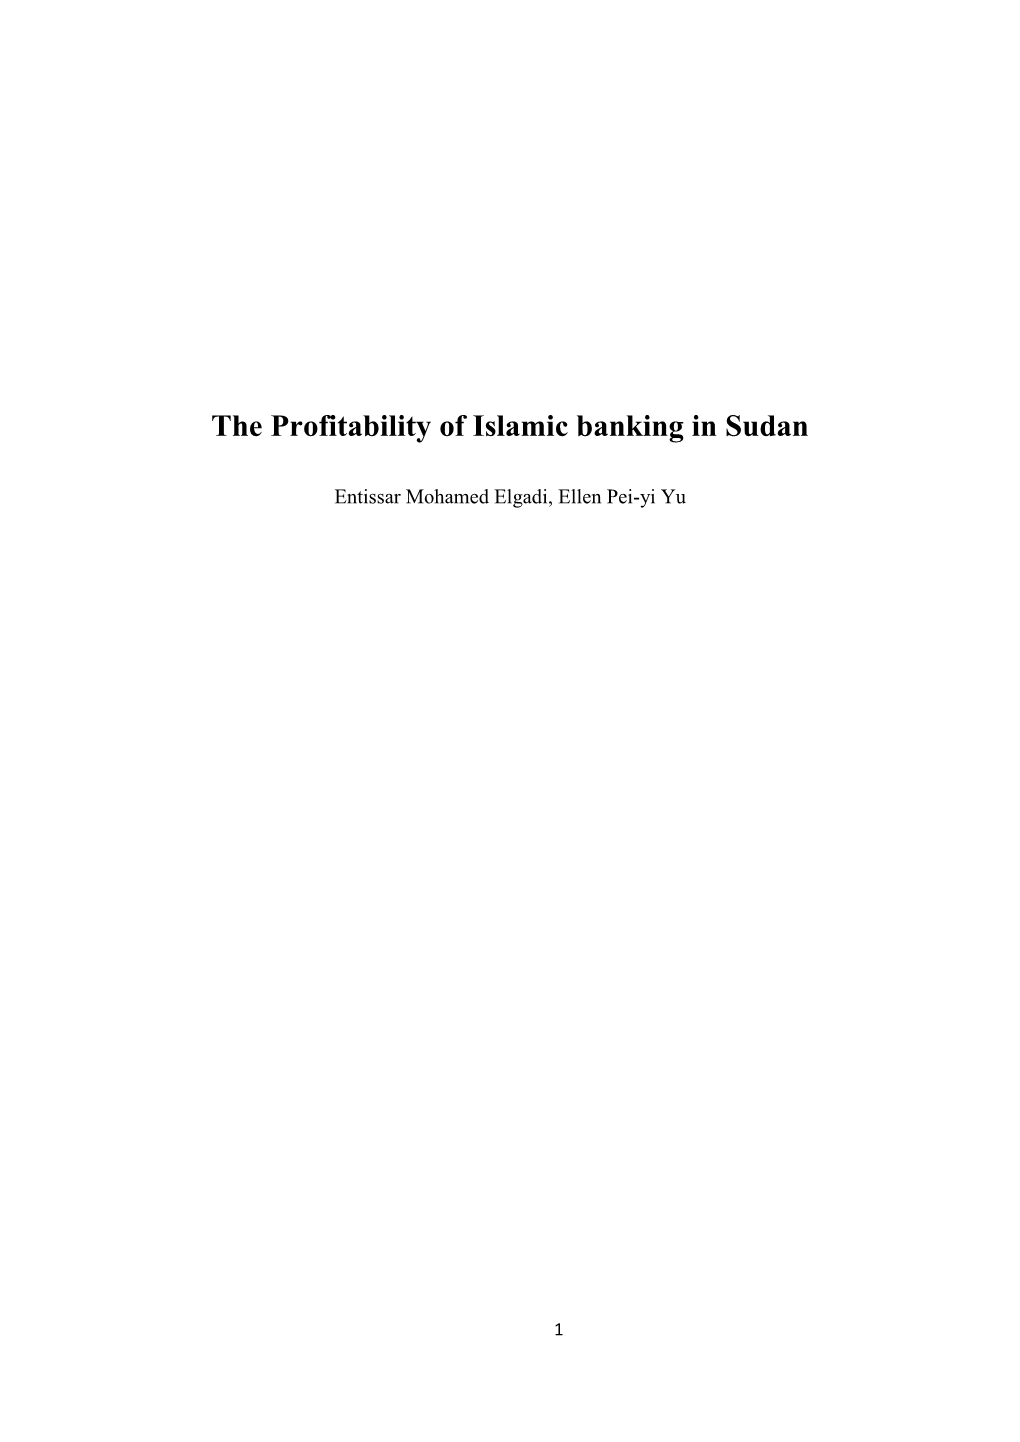 The Profitability of Islamic Banking in Sudan